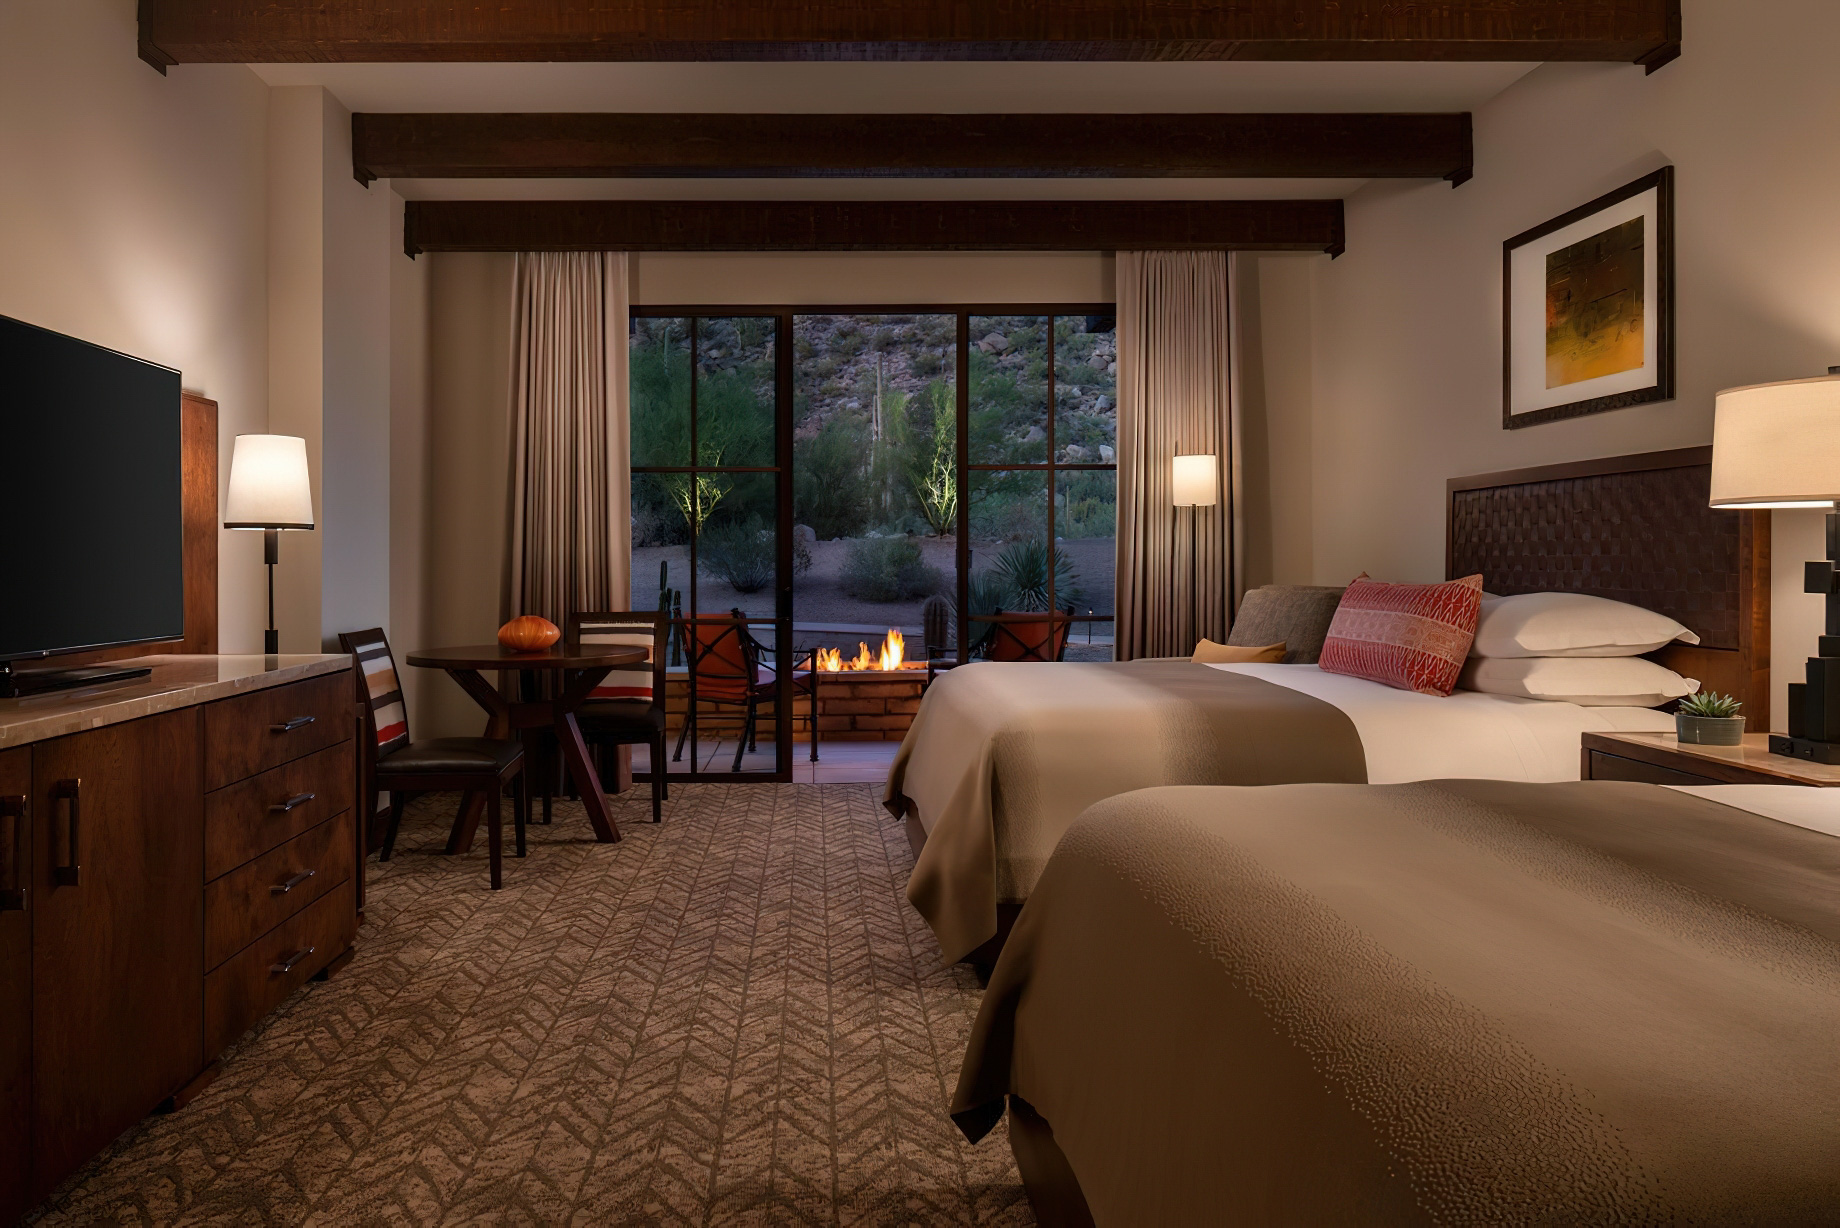 The Ritz-Carlton, Dove Mountain Resort - Marana, AZ, USA - Fireside Mountain View Room